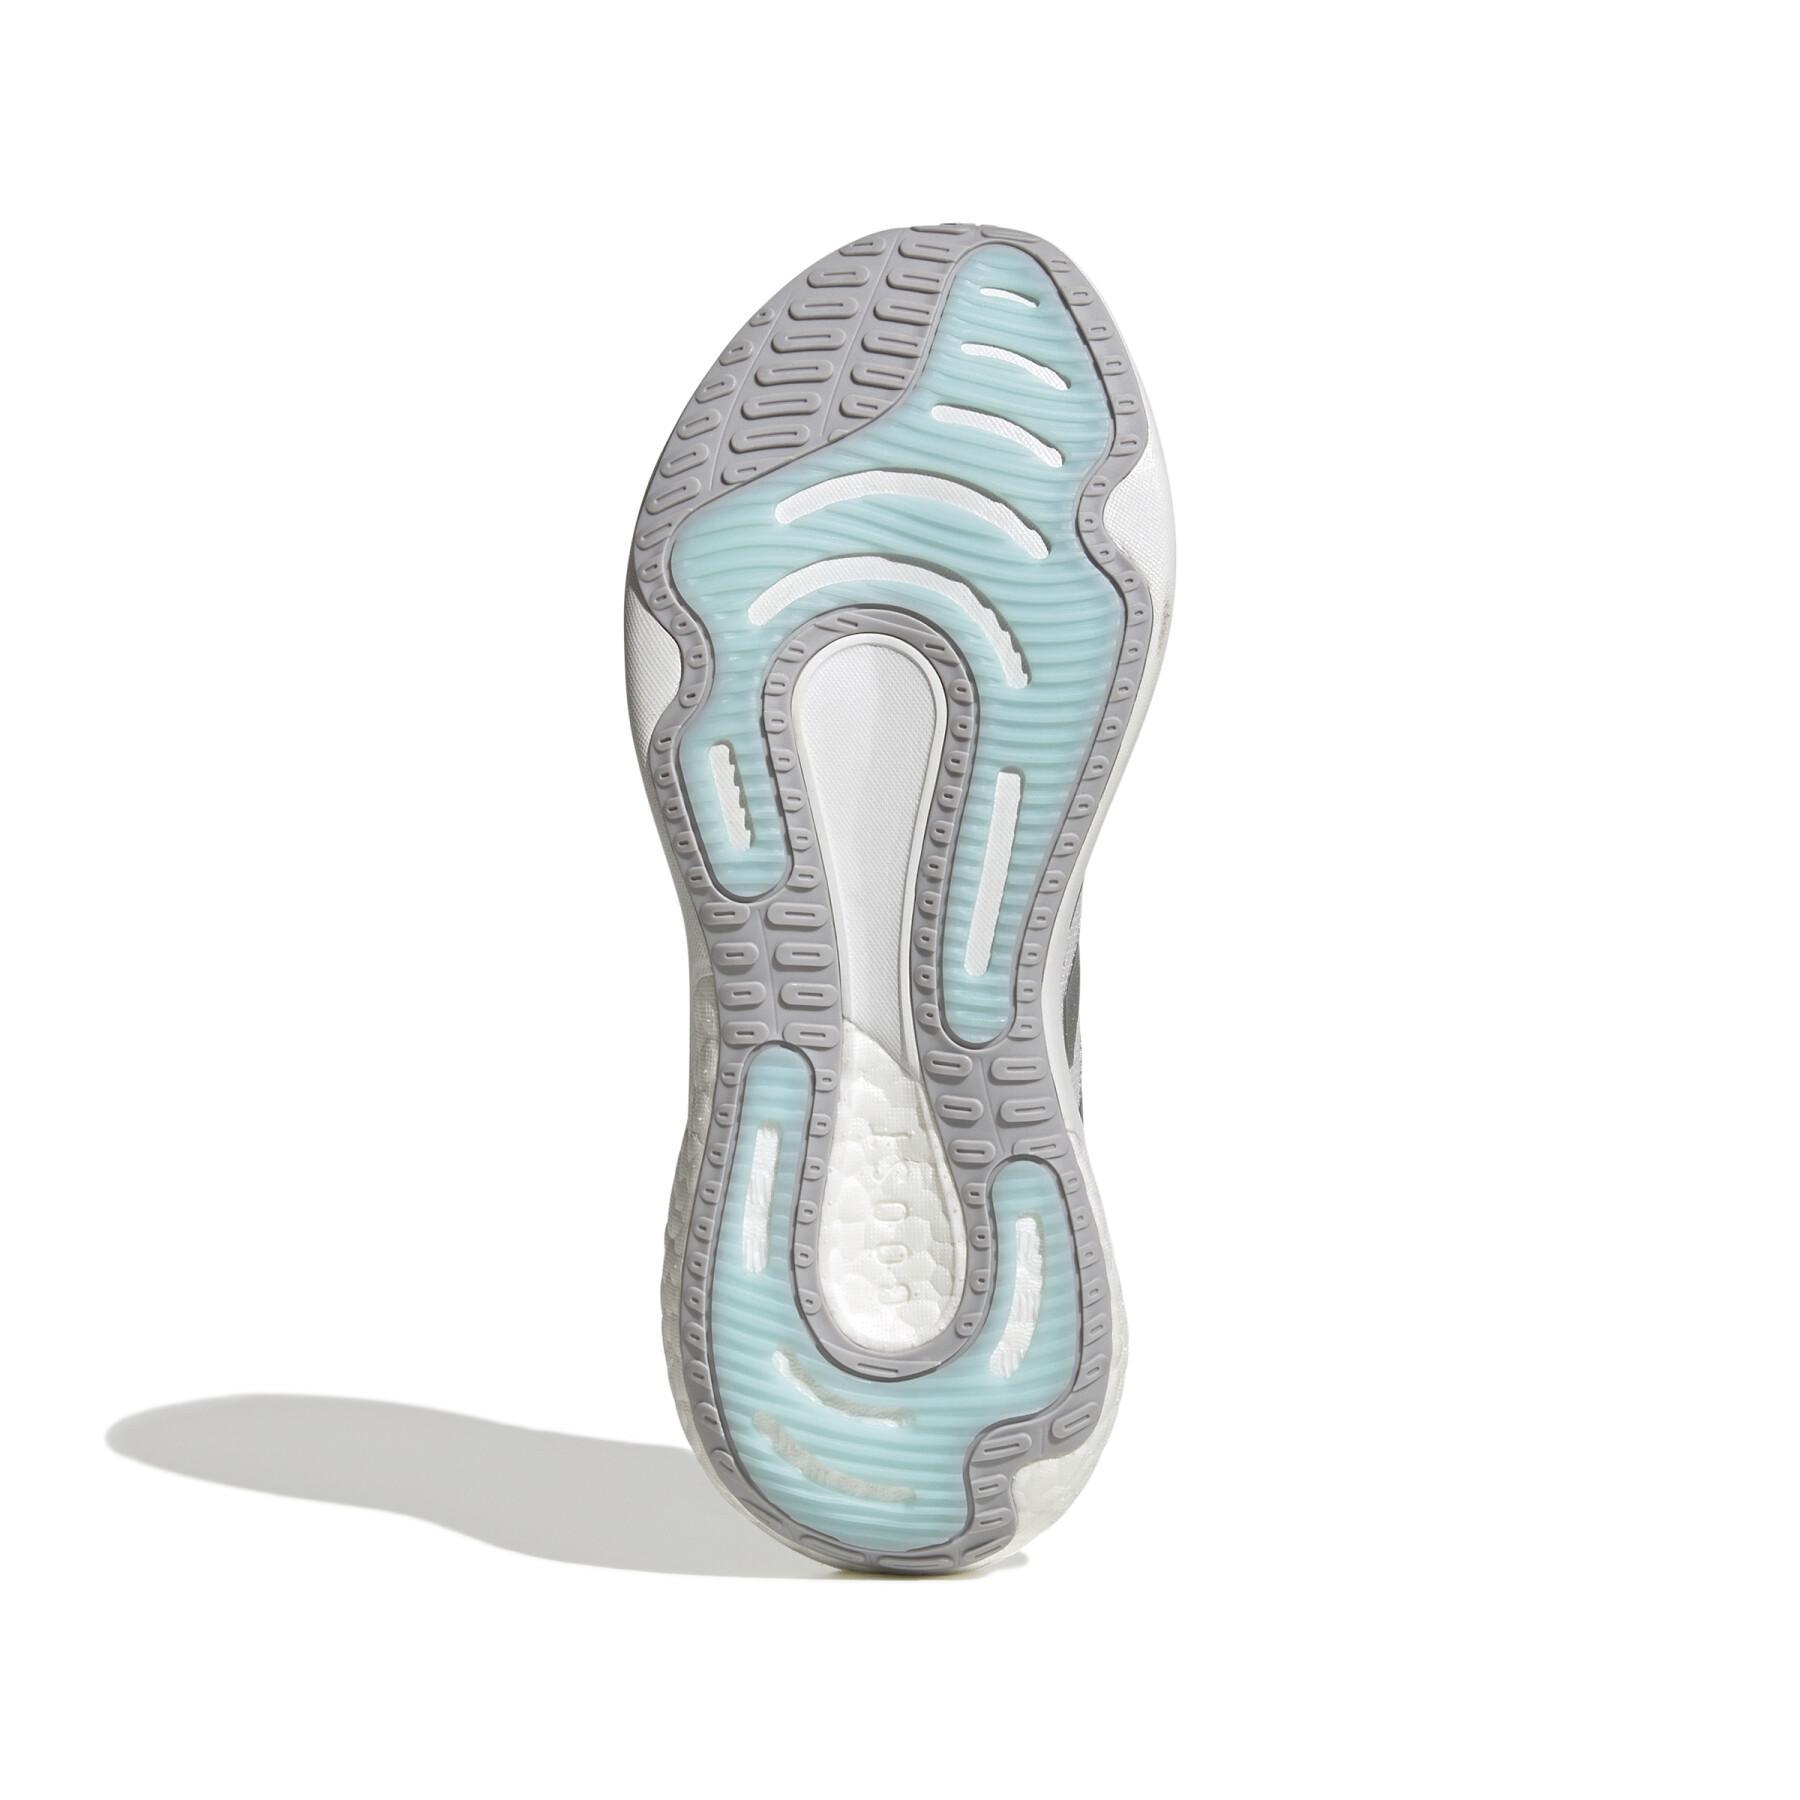 Women's running shoes adidas Supernova 2